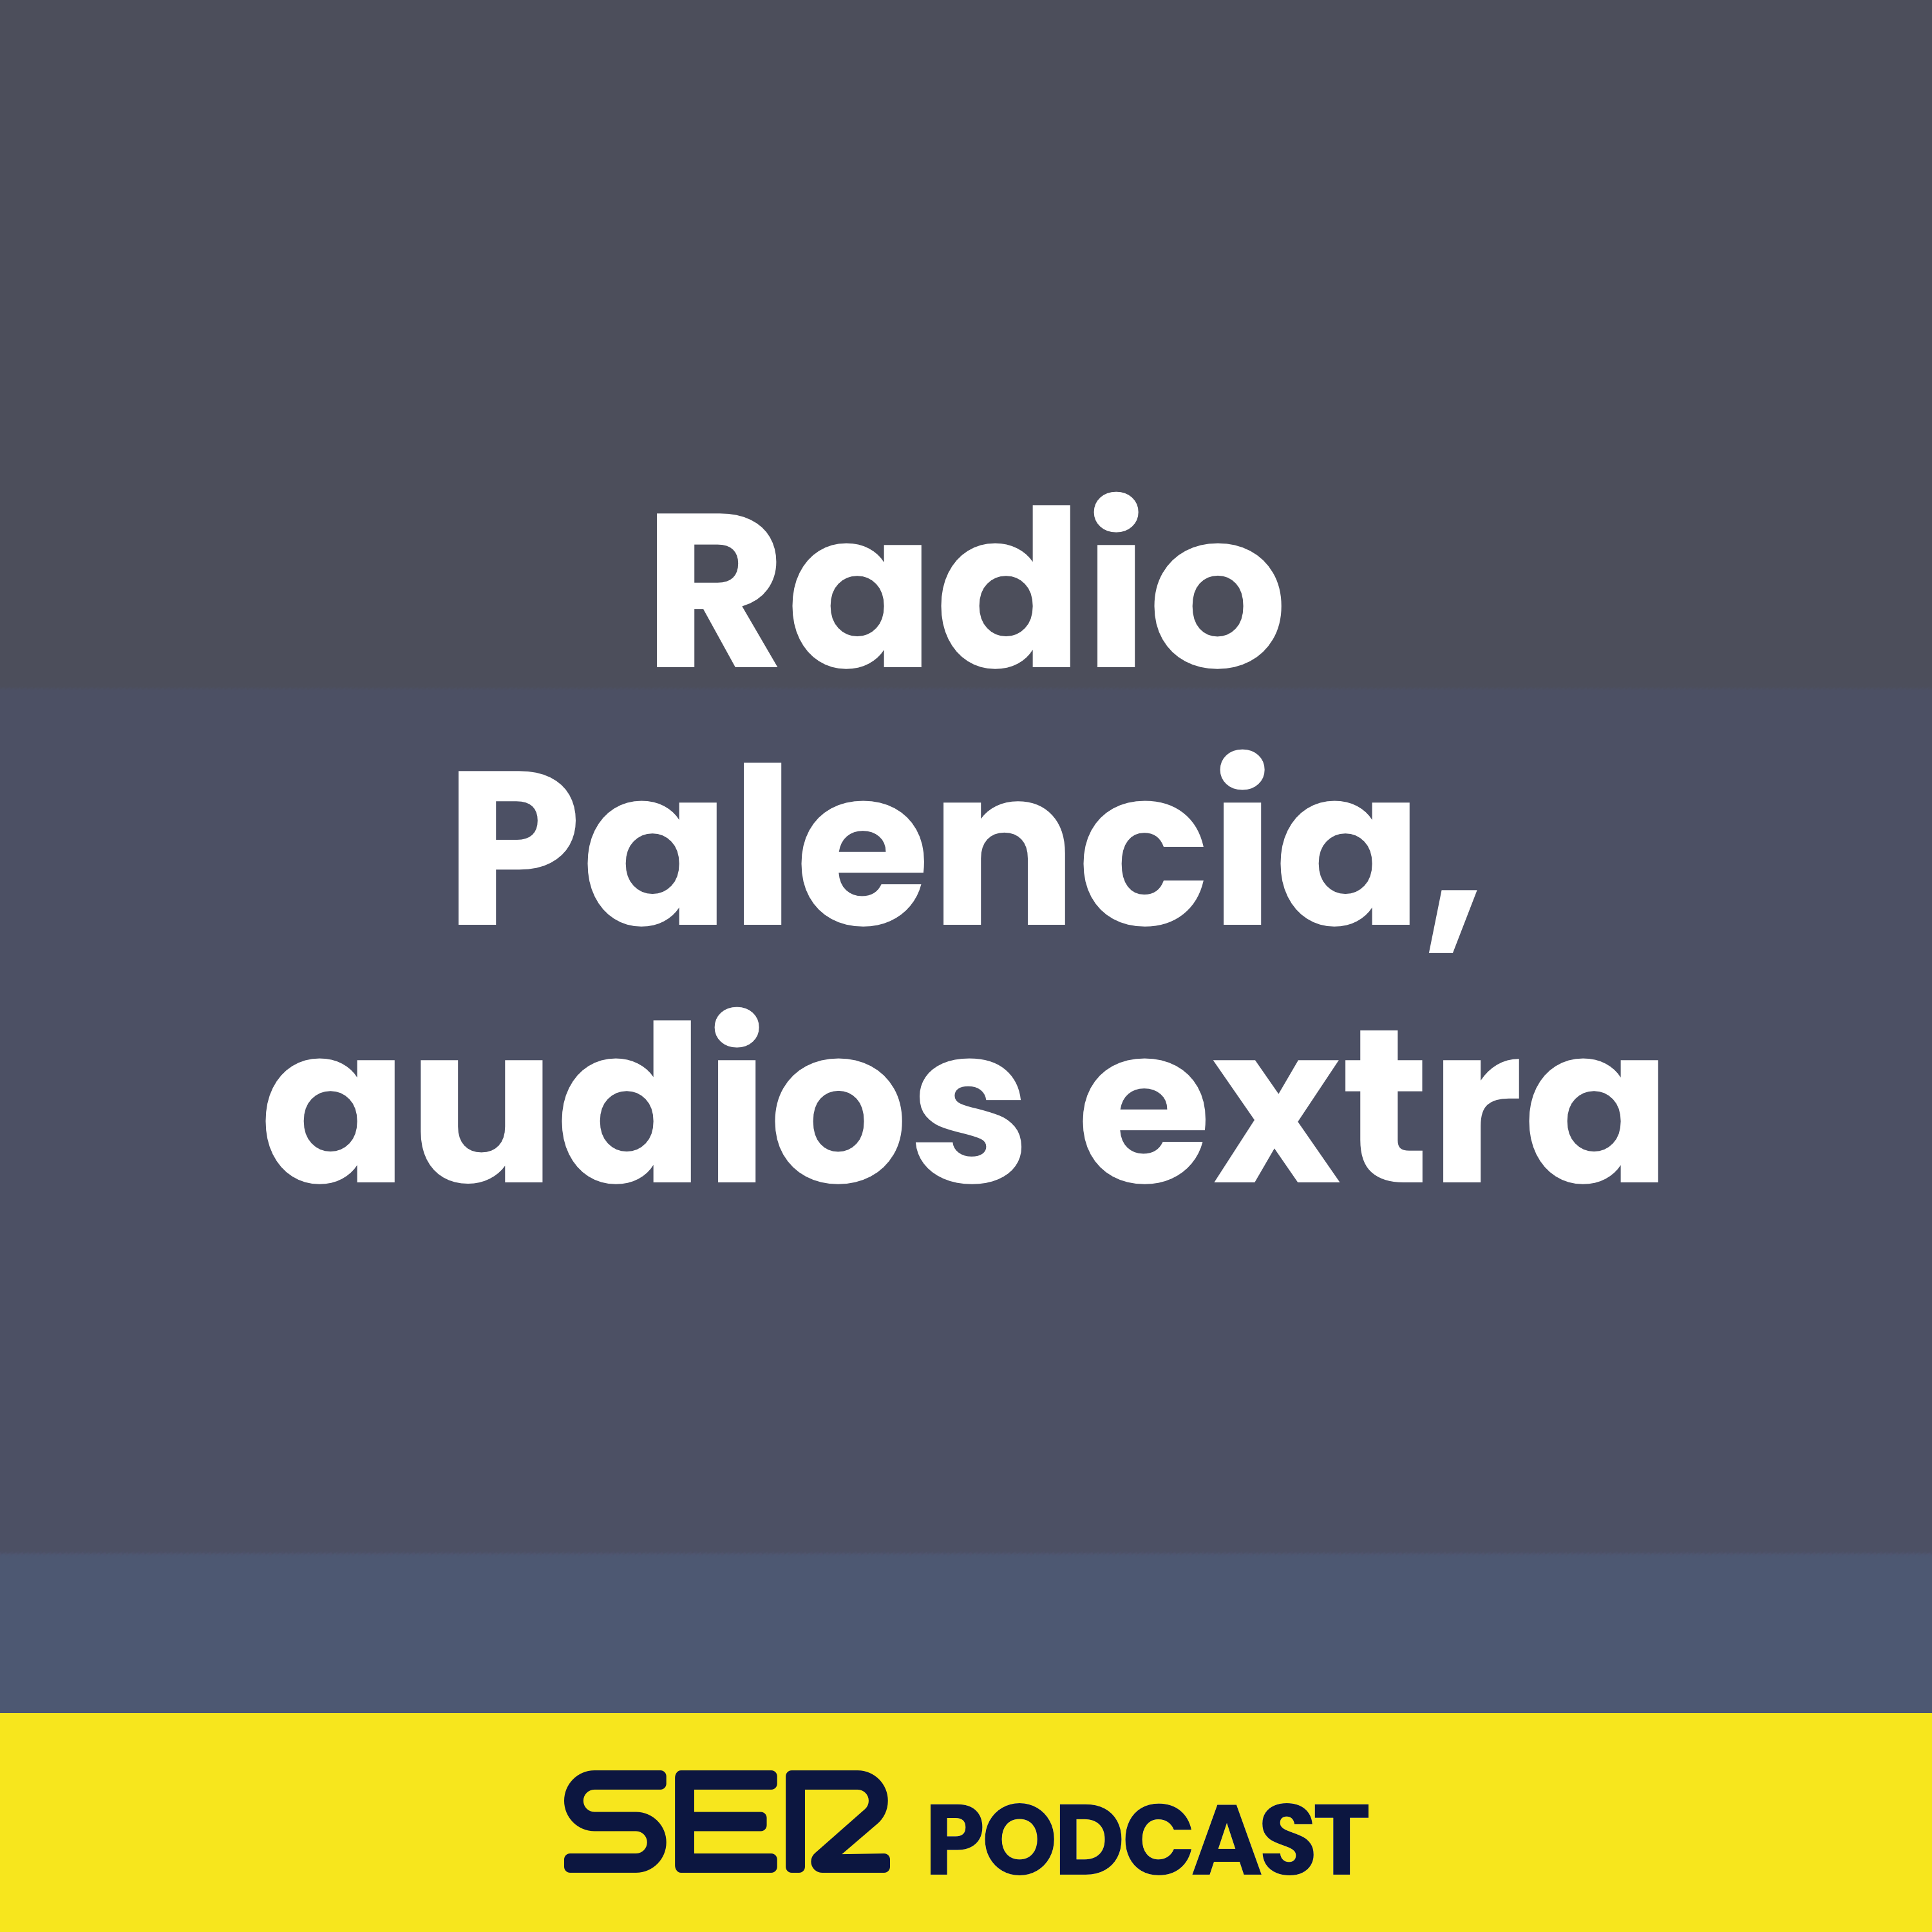 Radio Palencia, audios extra